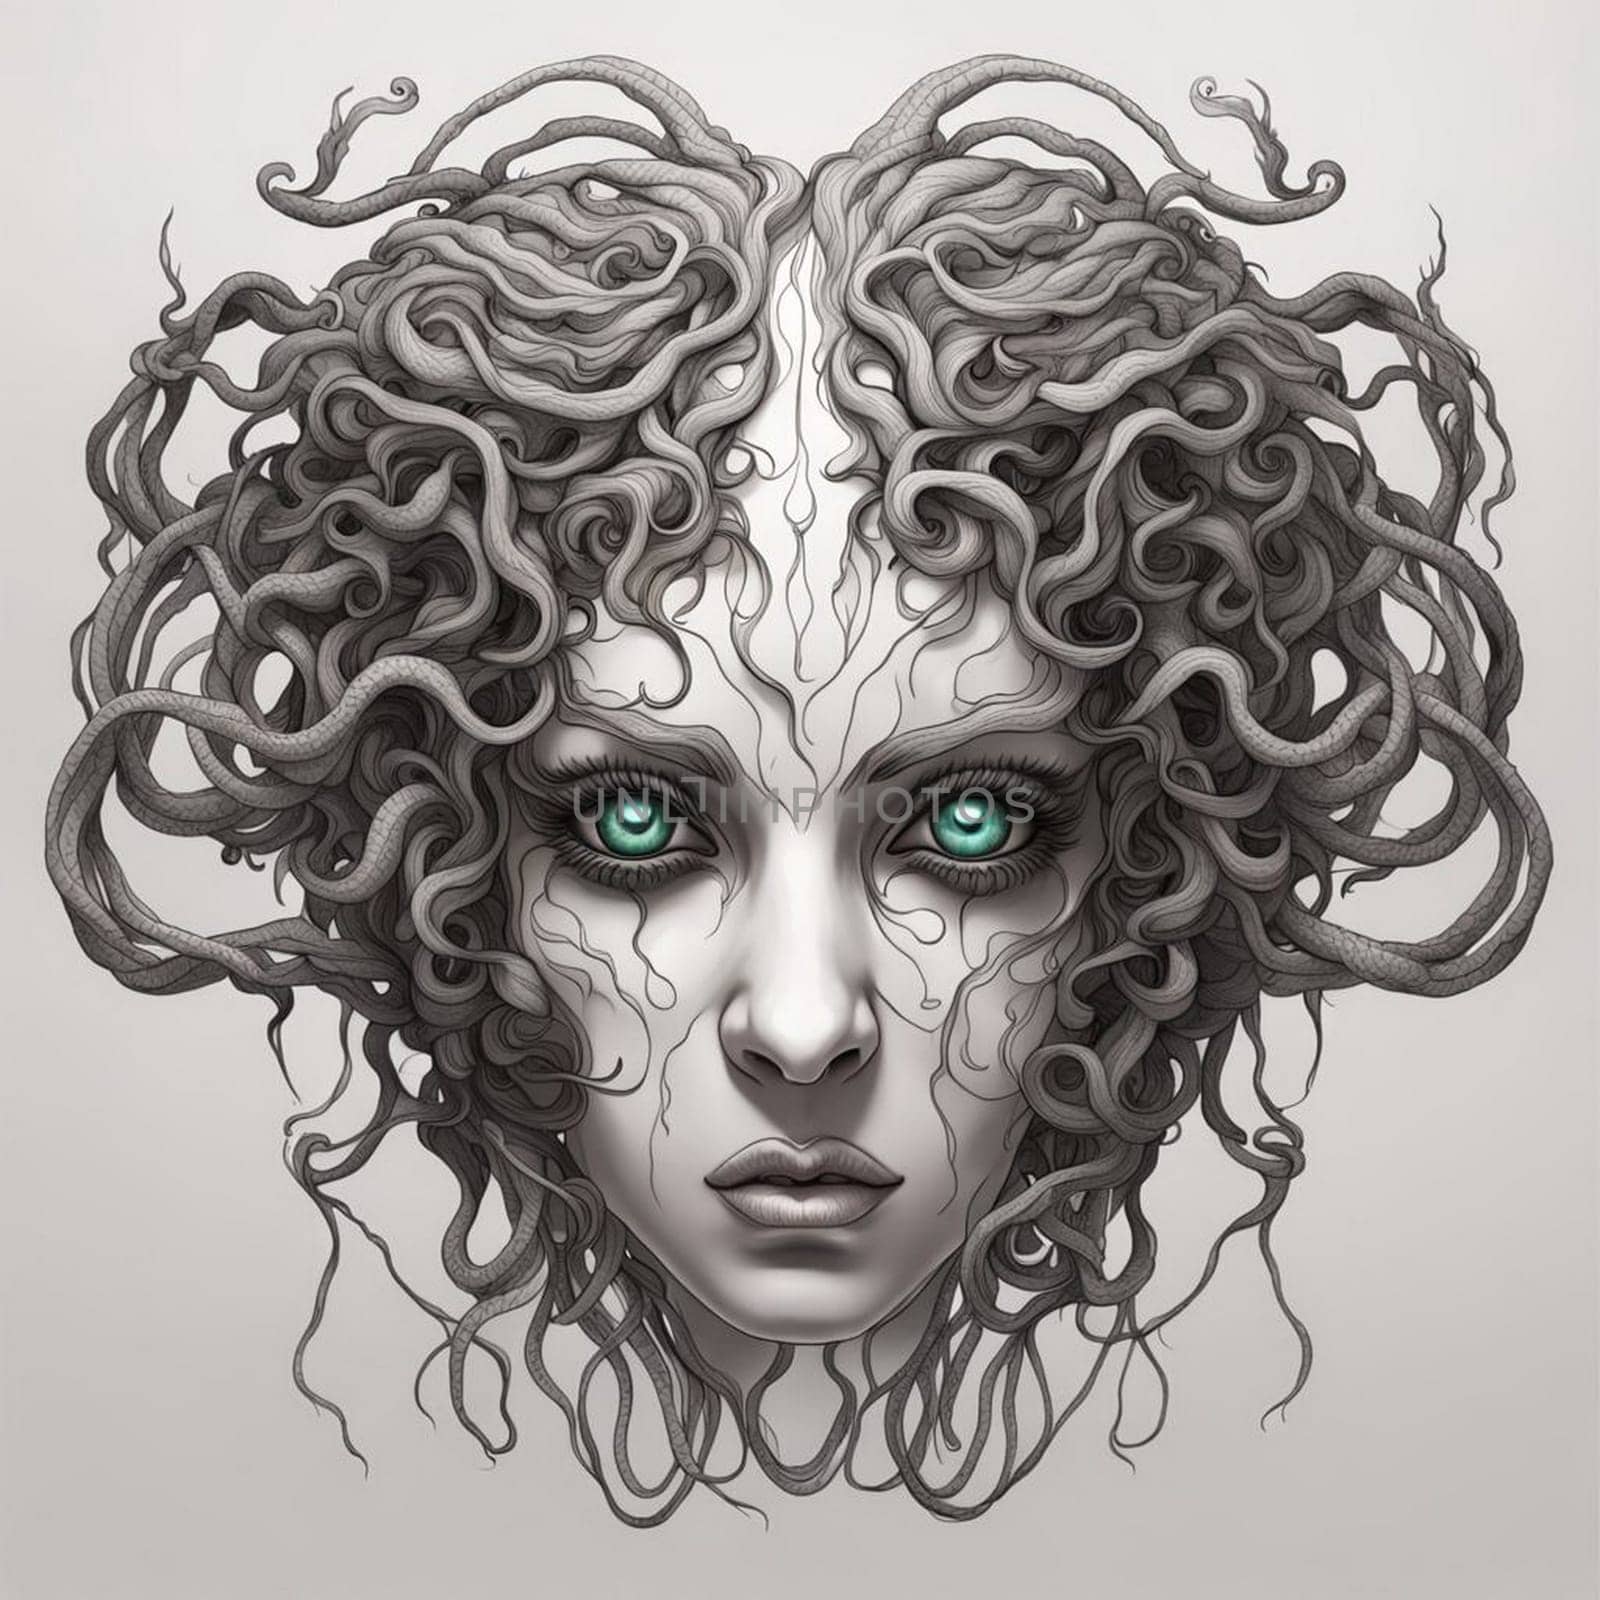 Monochrome portrait of a Medusa. by Vailatese46